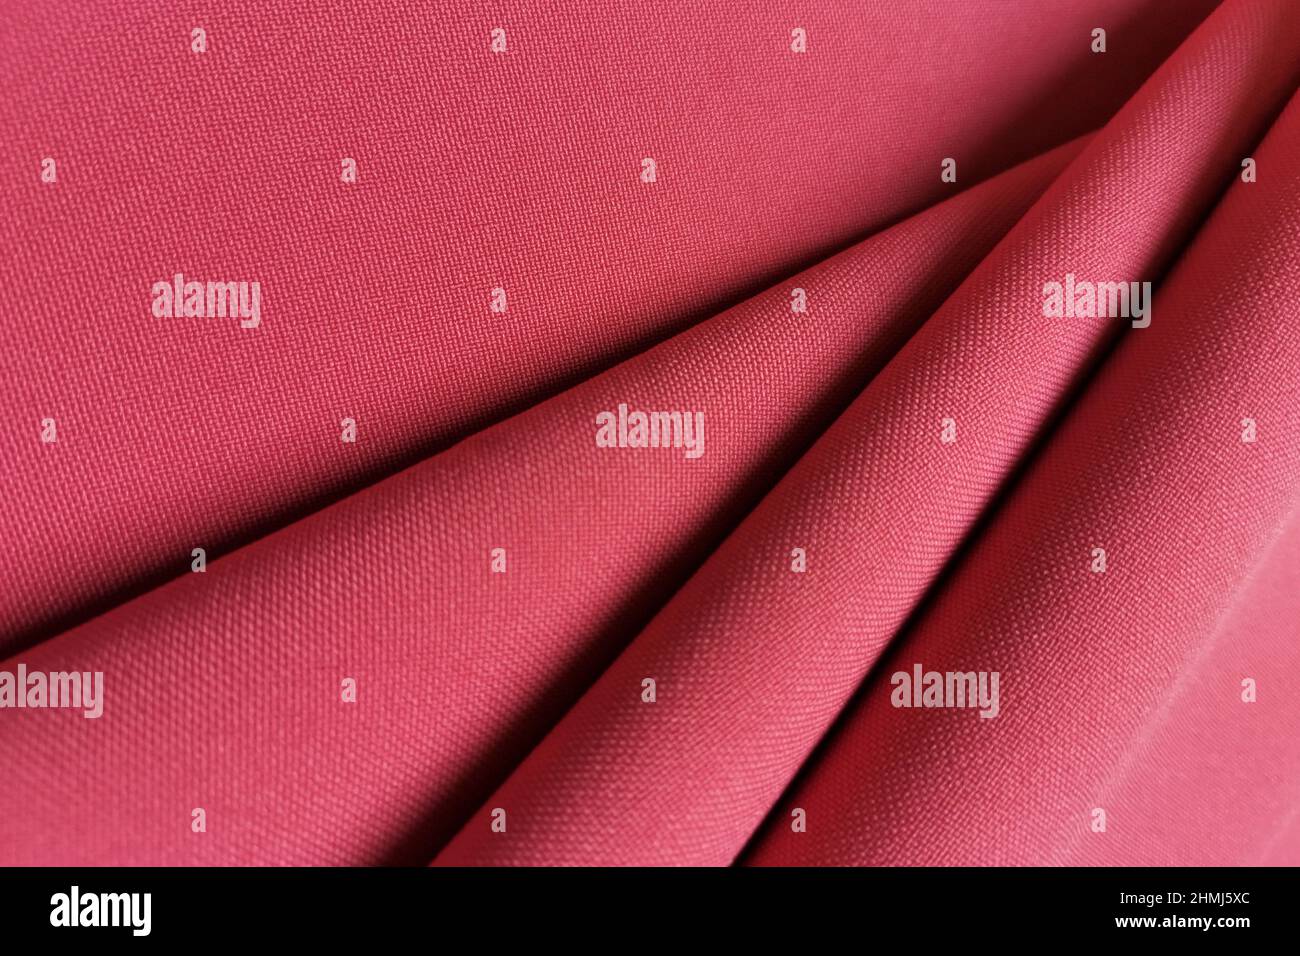 Pink crumpled or wavy fabric texture background. Abstract linen cloth soft waves. Gabardine wool fabric. Merino yarn. Smooth elegant luxury cloth Stock Photo